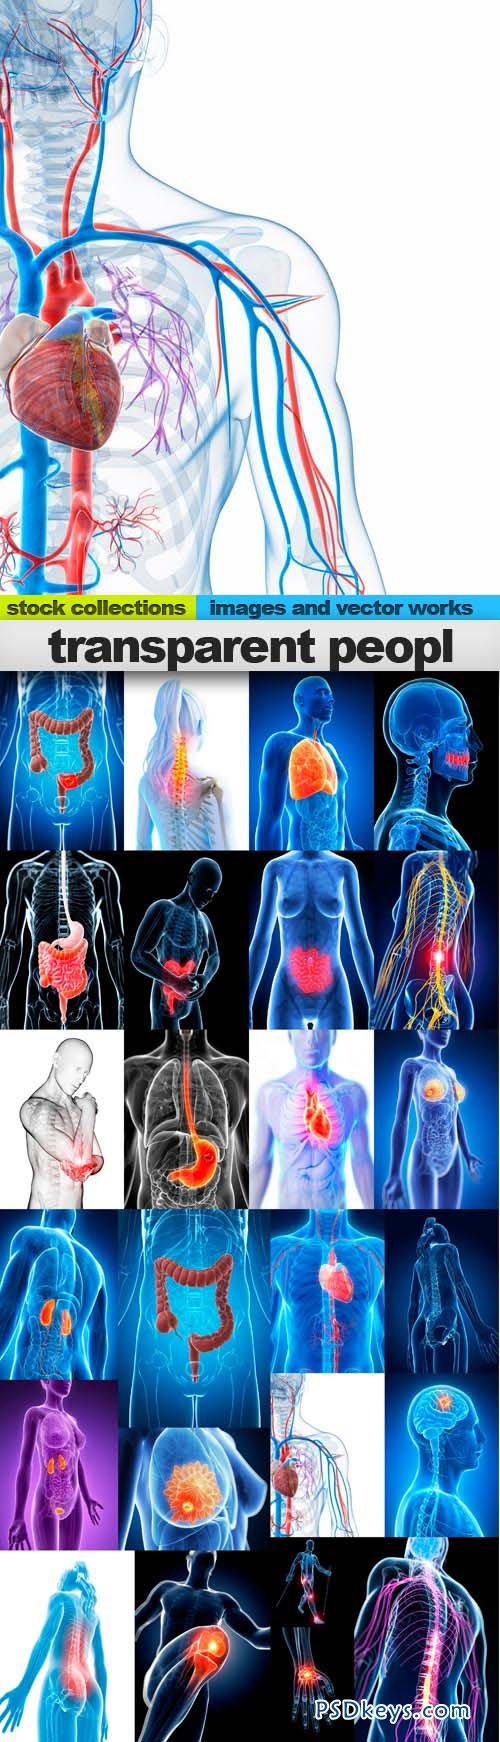 Transparent people 25xUHQ JPEG